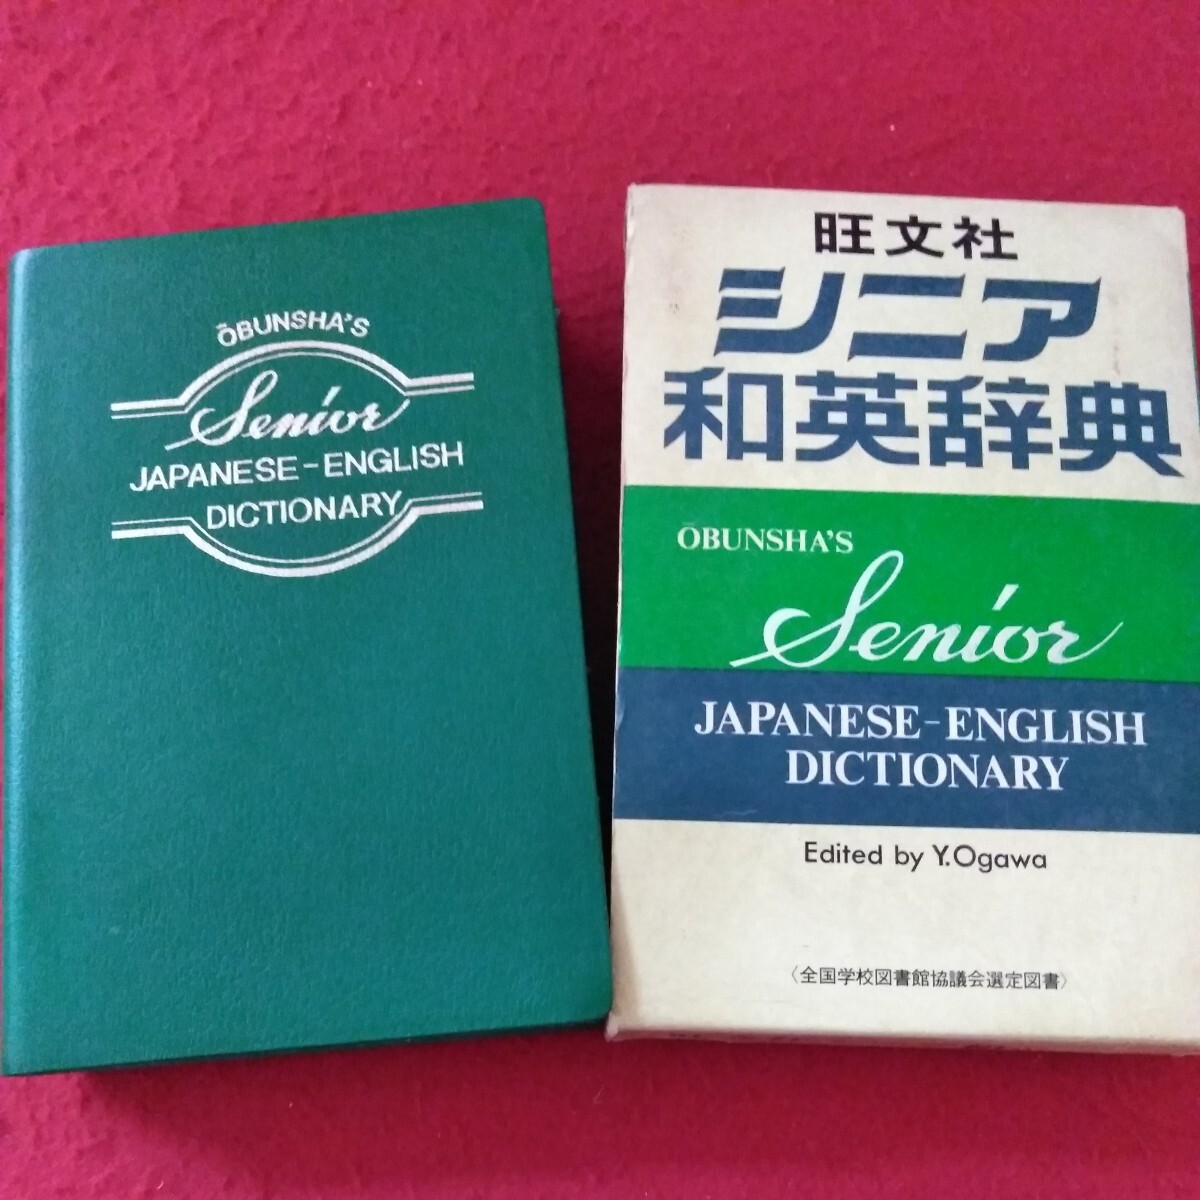 Q-407　OBUNSHA'S Senior JAPANESE-ENGLISH DICTIONARY 旺文社 シニア和英辞典　昭和49年1月20日 重版 発行　発行者/鳥居正ハク ※10_画像2